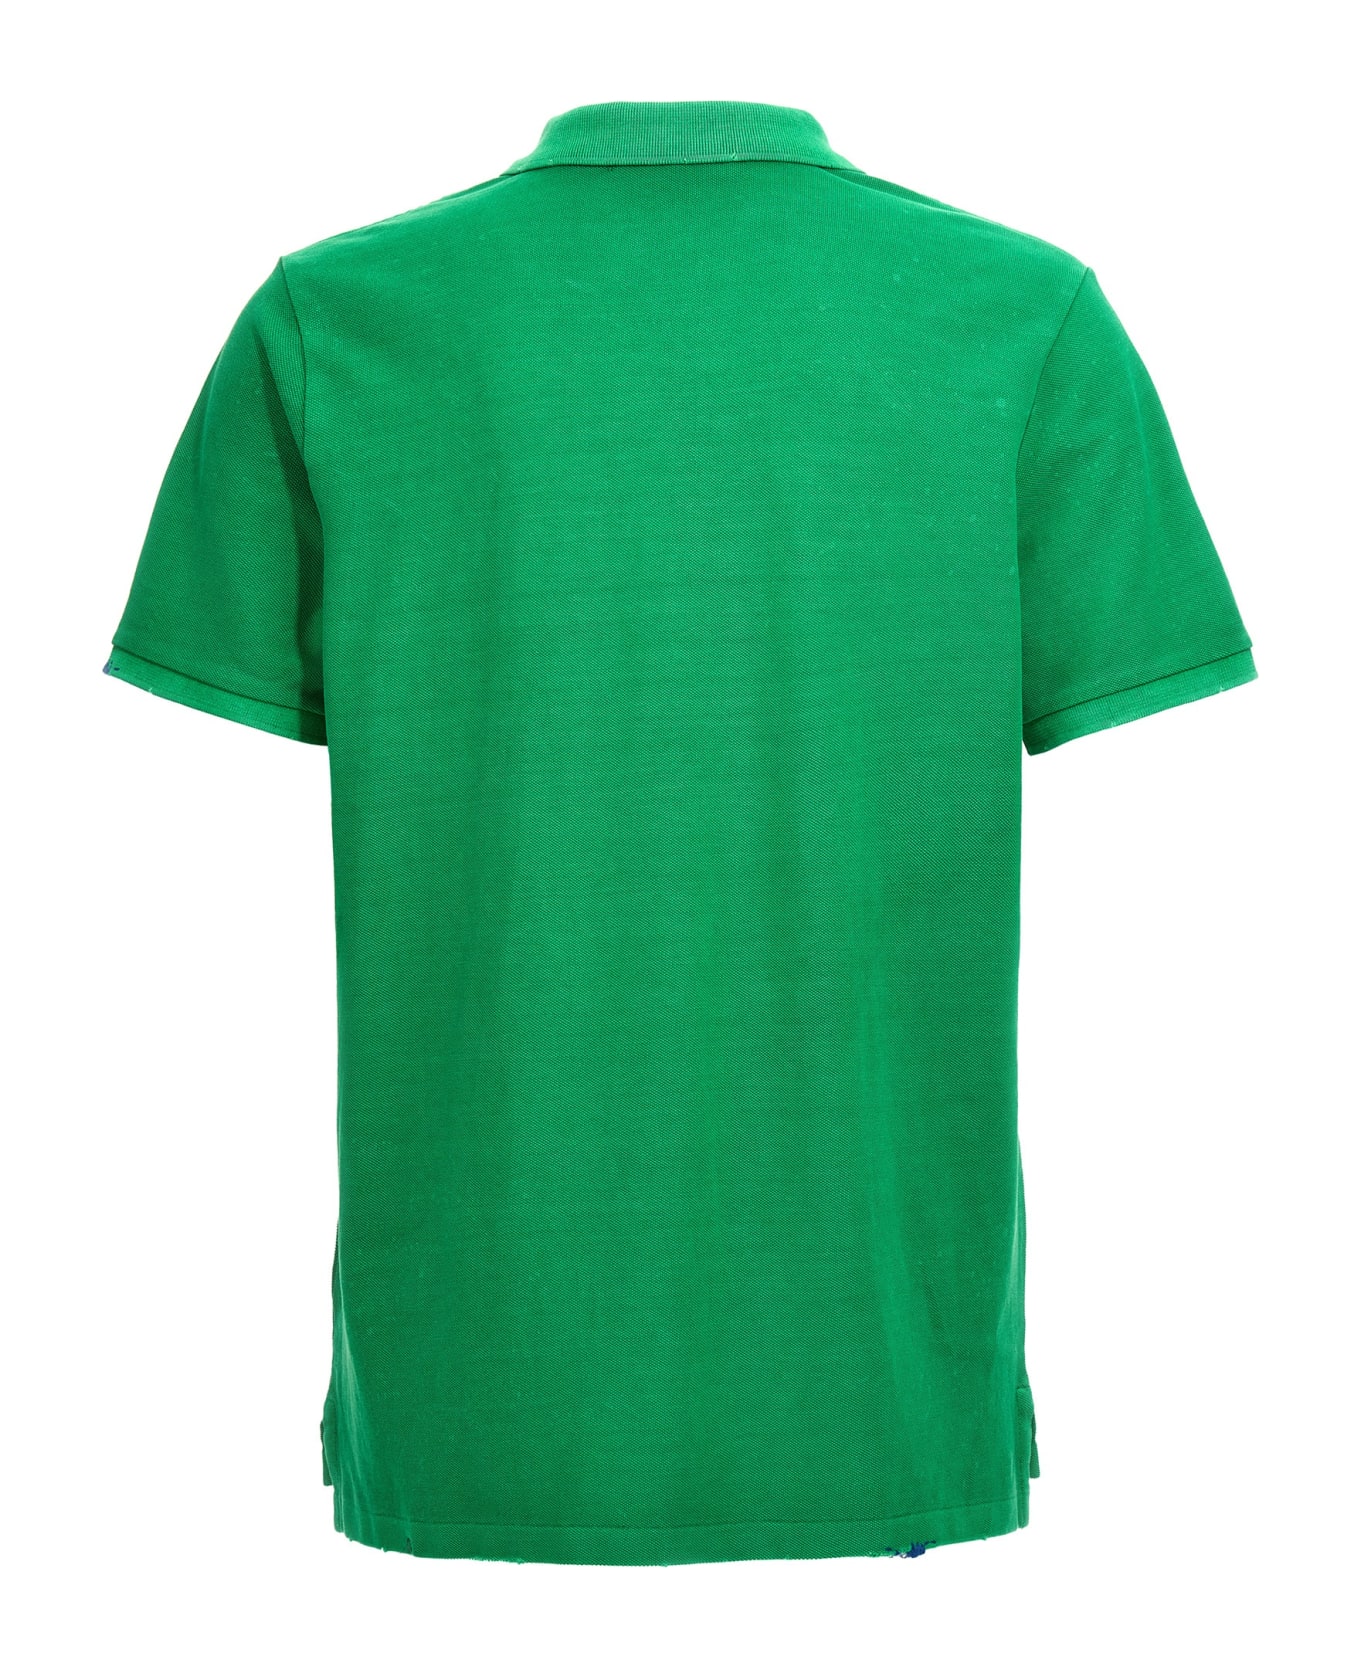 Polo Ralph Lauren Logo Embroidery Polo Shirt - Green ポロシャツ